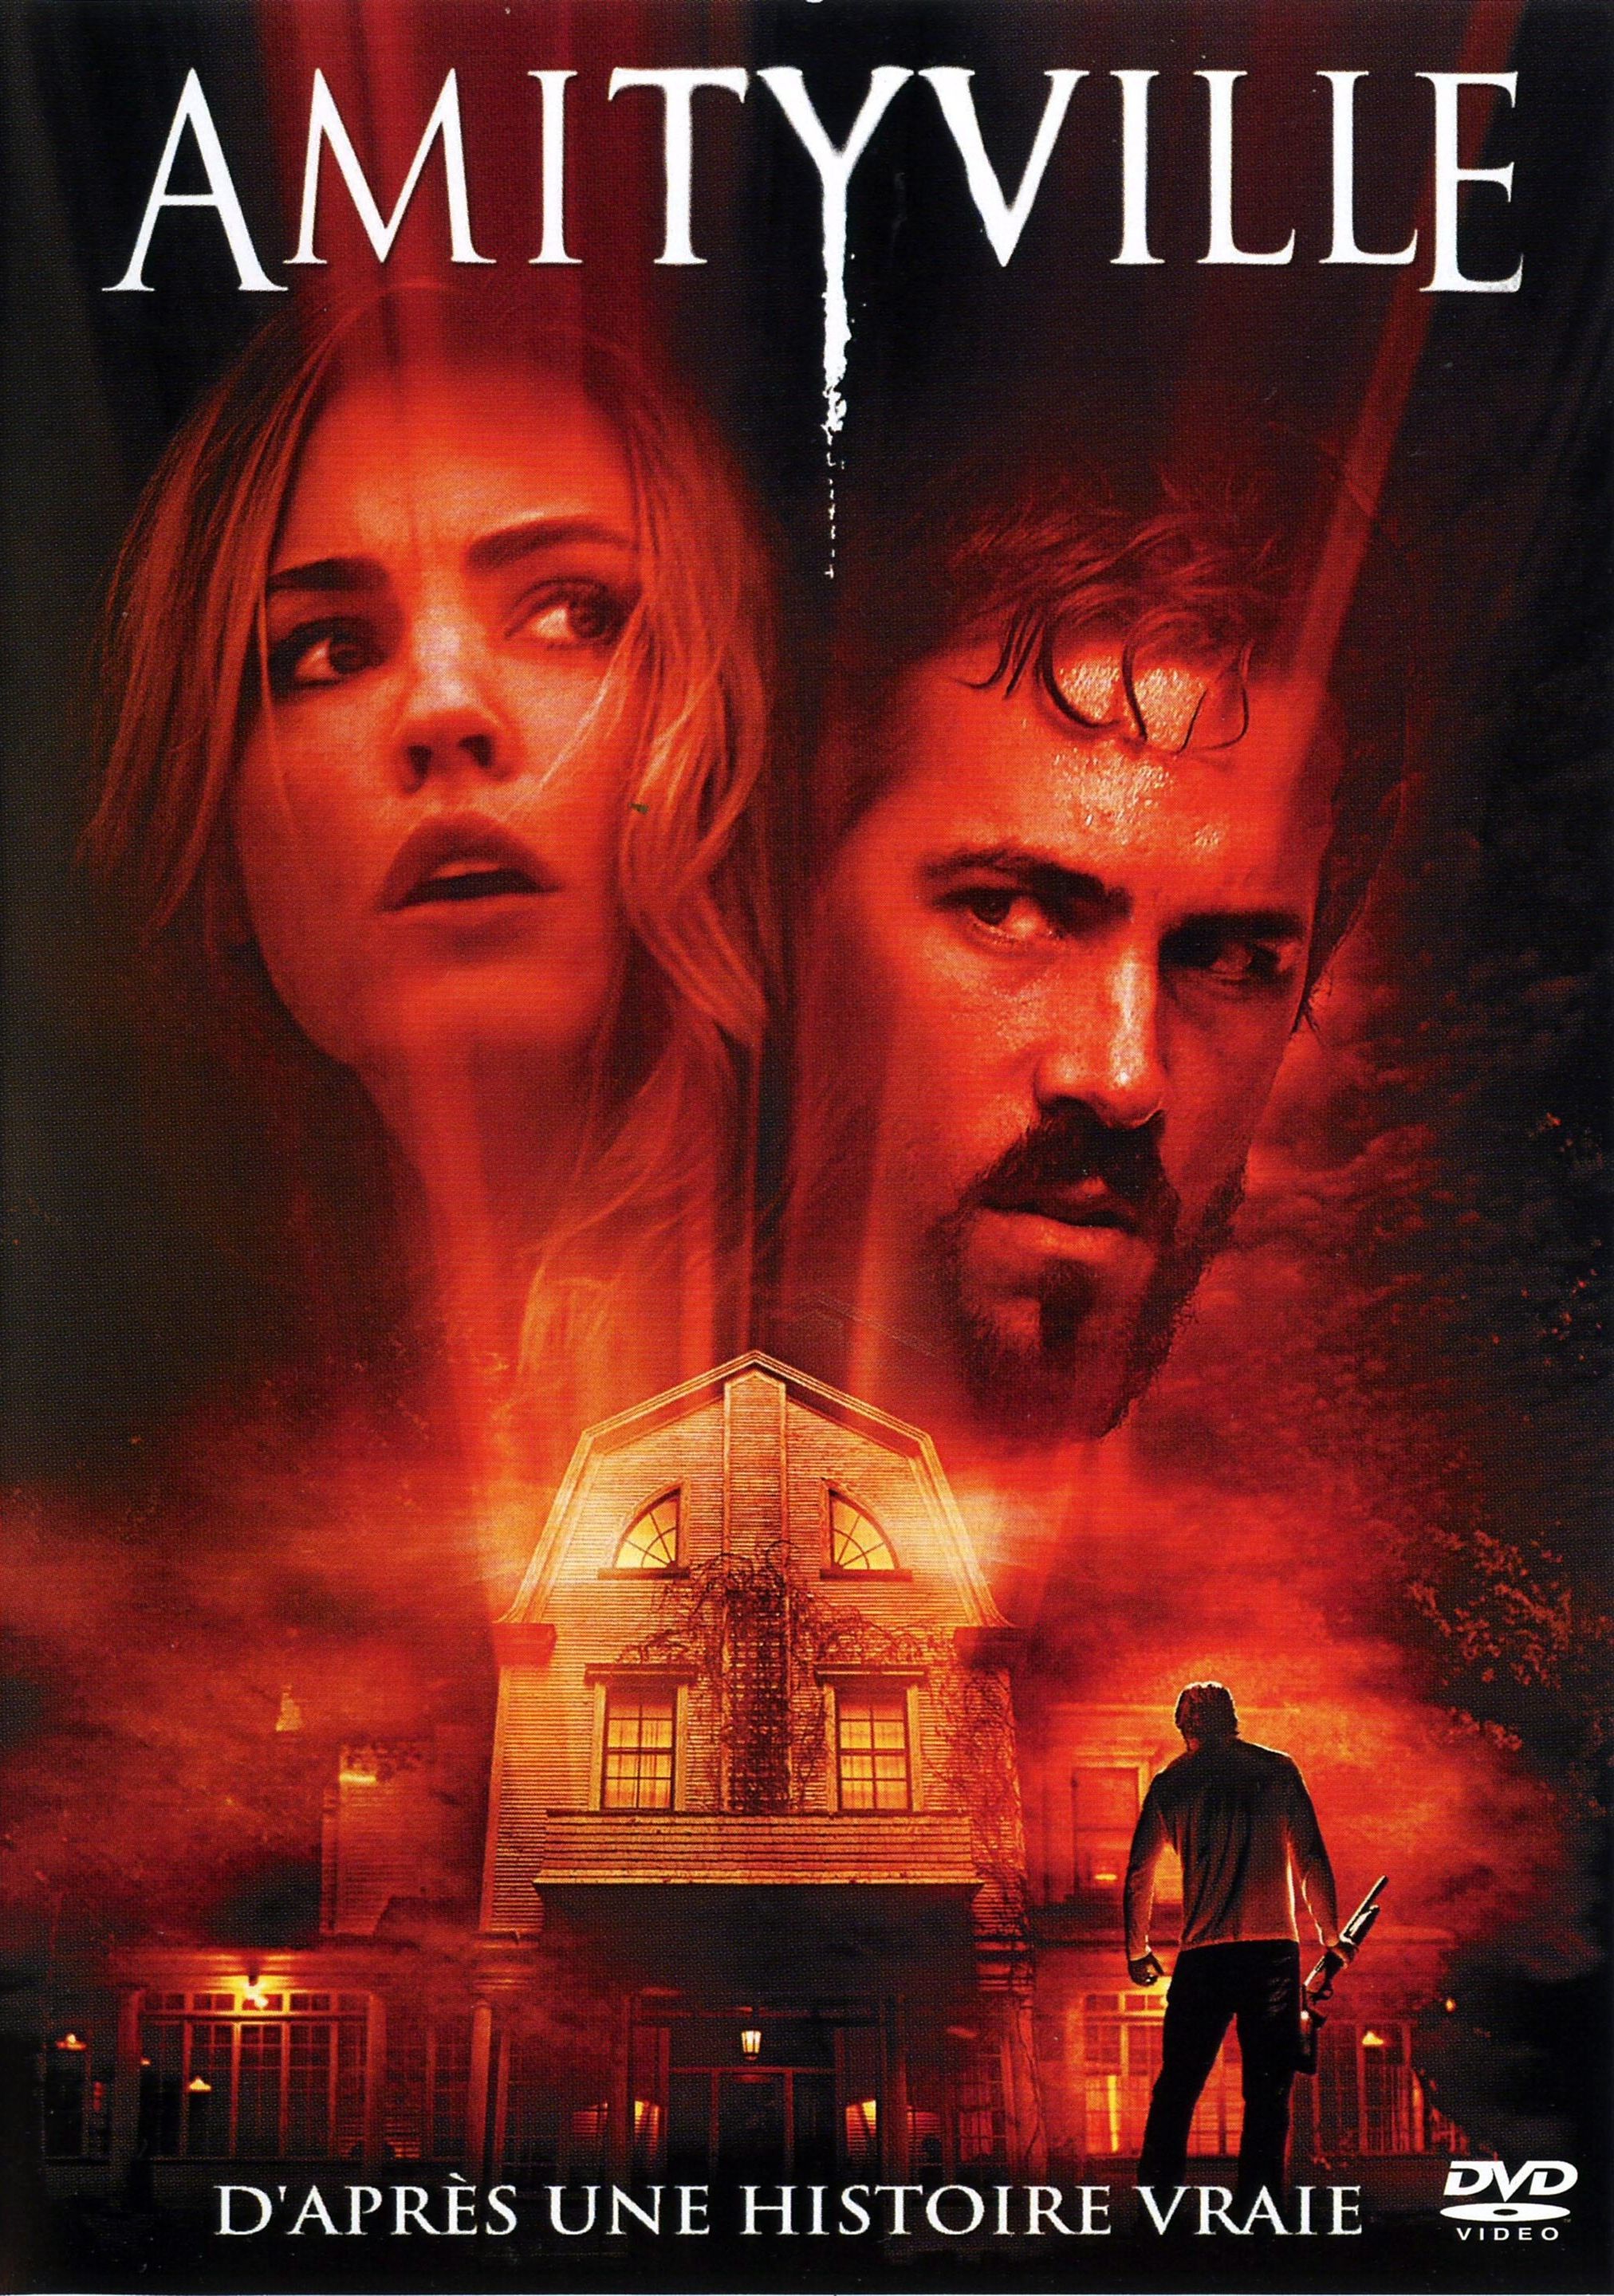 The Amityville Horror (2005) - Kaustav Sinha's favorite horror movie of all-time, starring Ryan Reynolds.